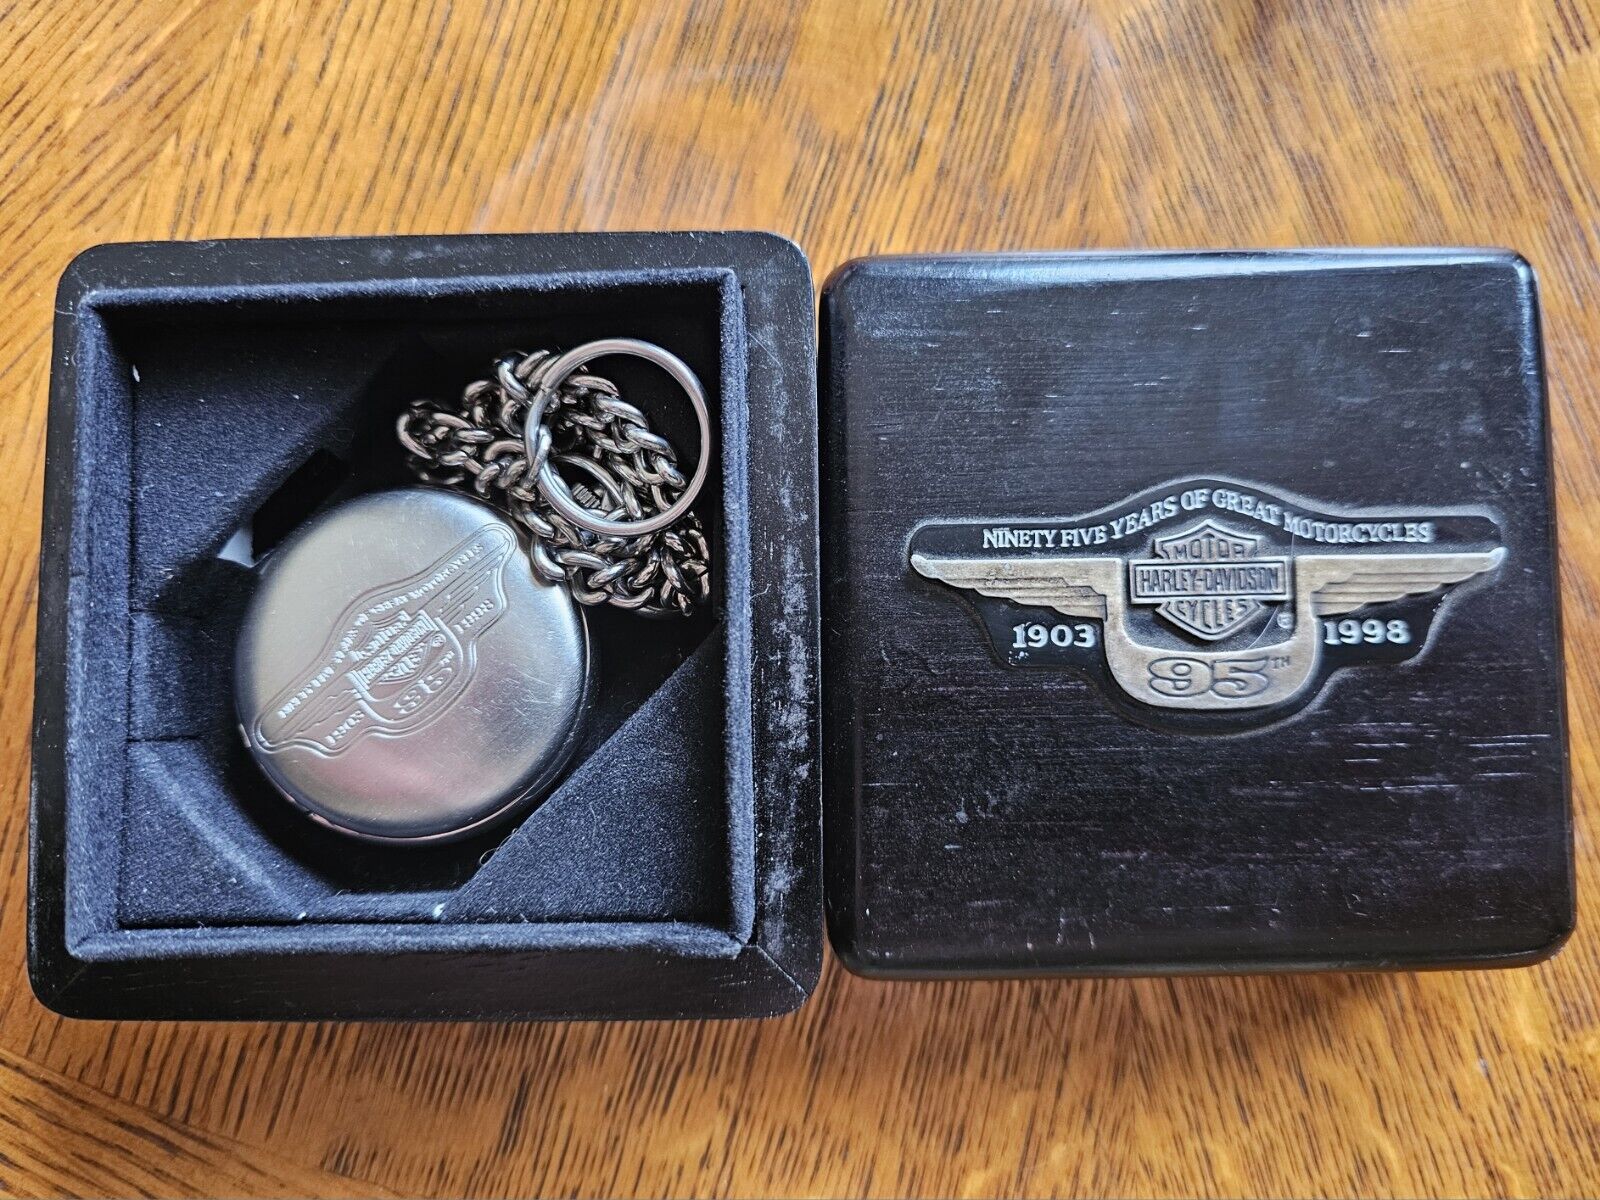 Harley Davidson 95th Anniversary Limited Edition Pocket Watch